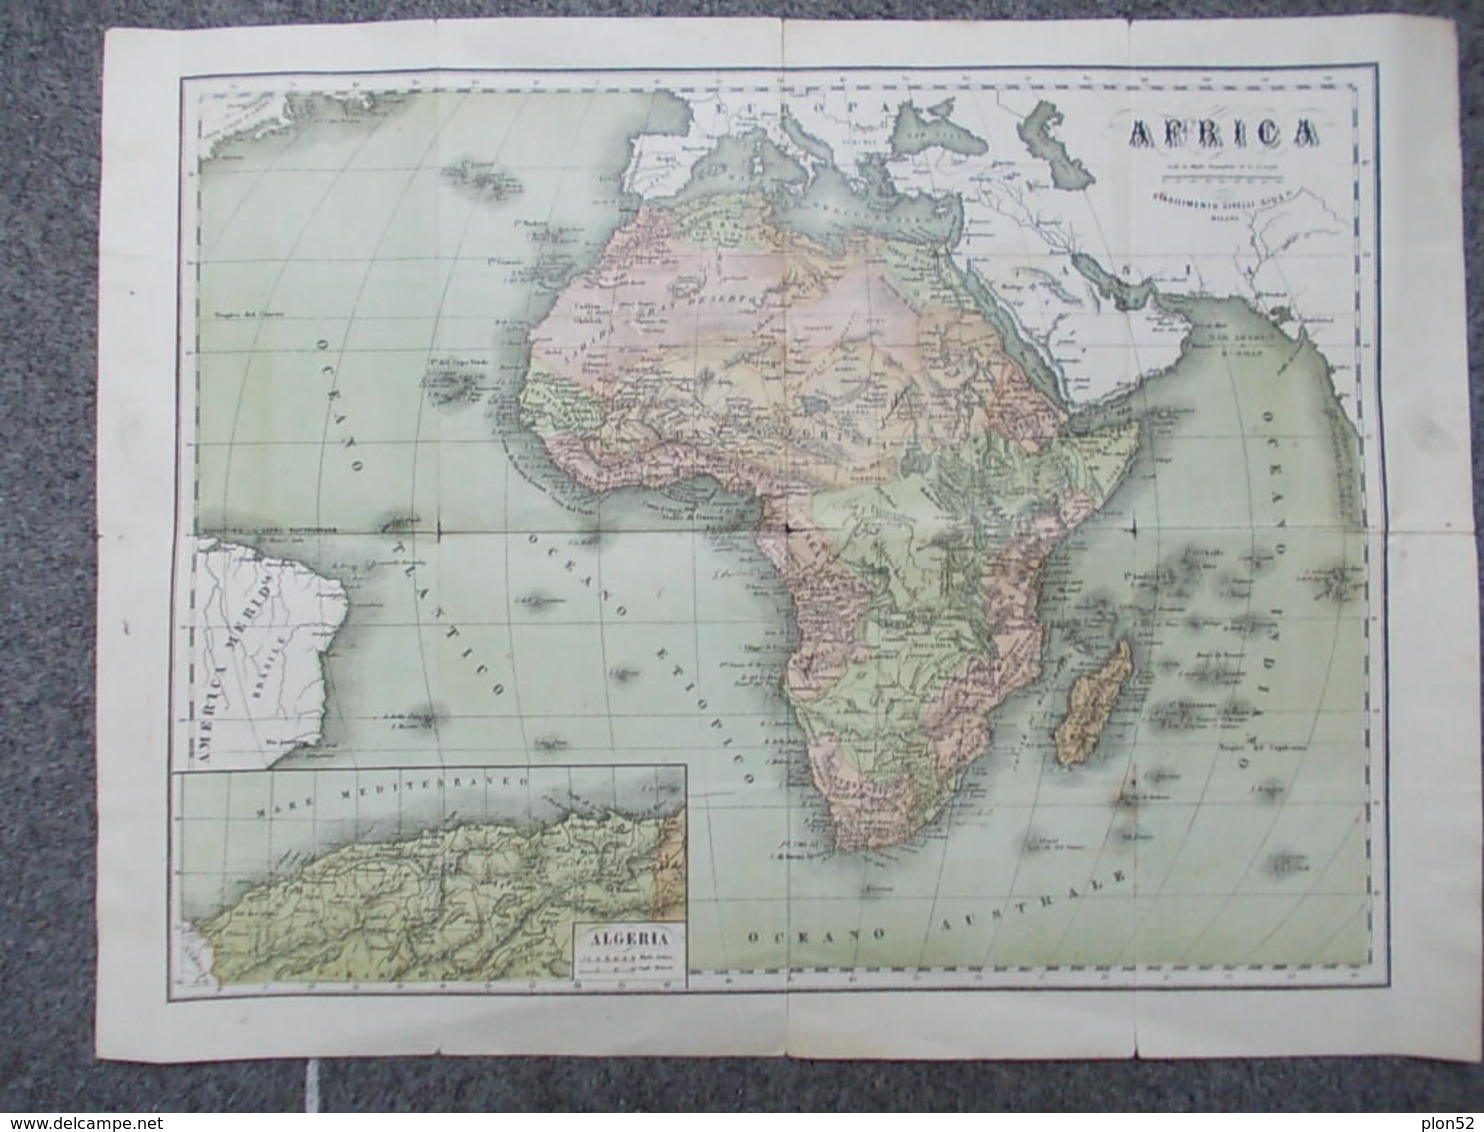 12661-CARTA GEOGRAFICA DELL'AFRICA - Carte Geographique